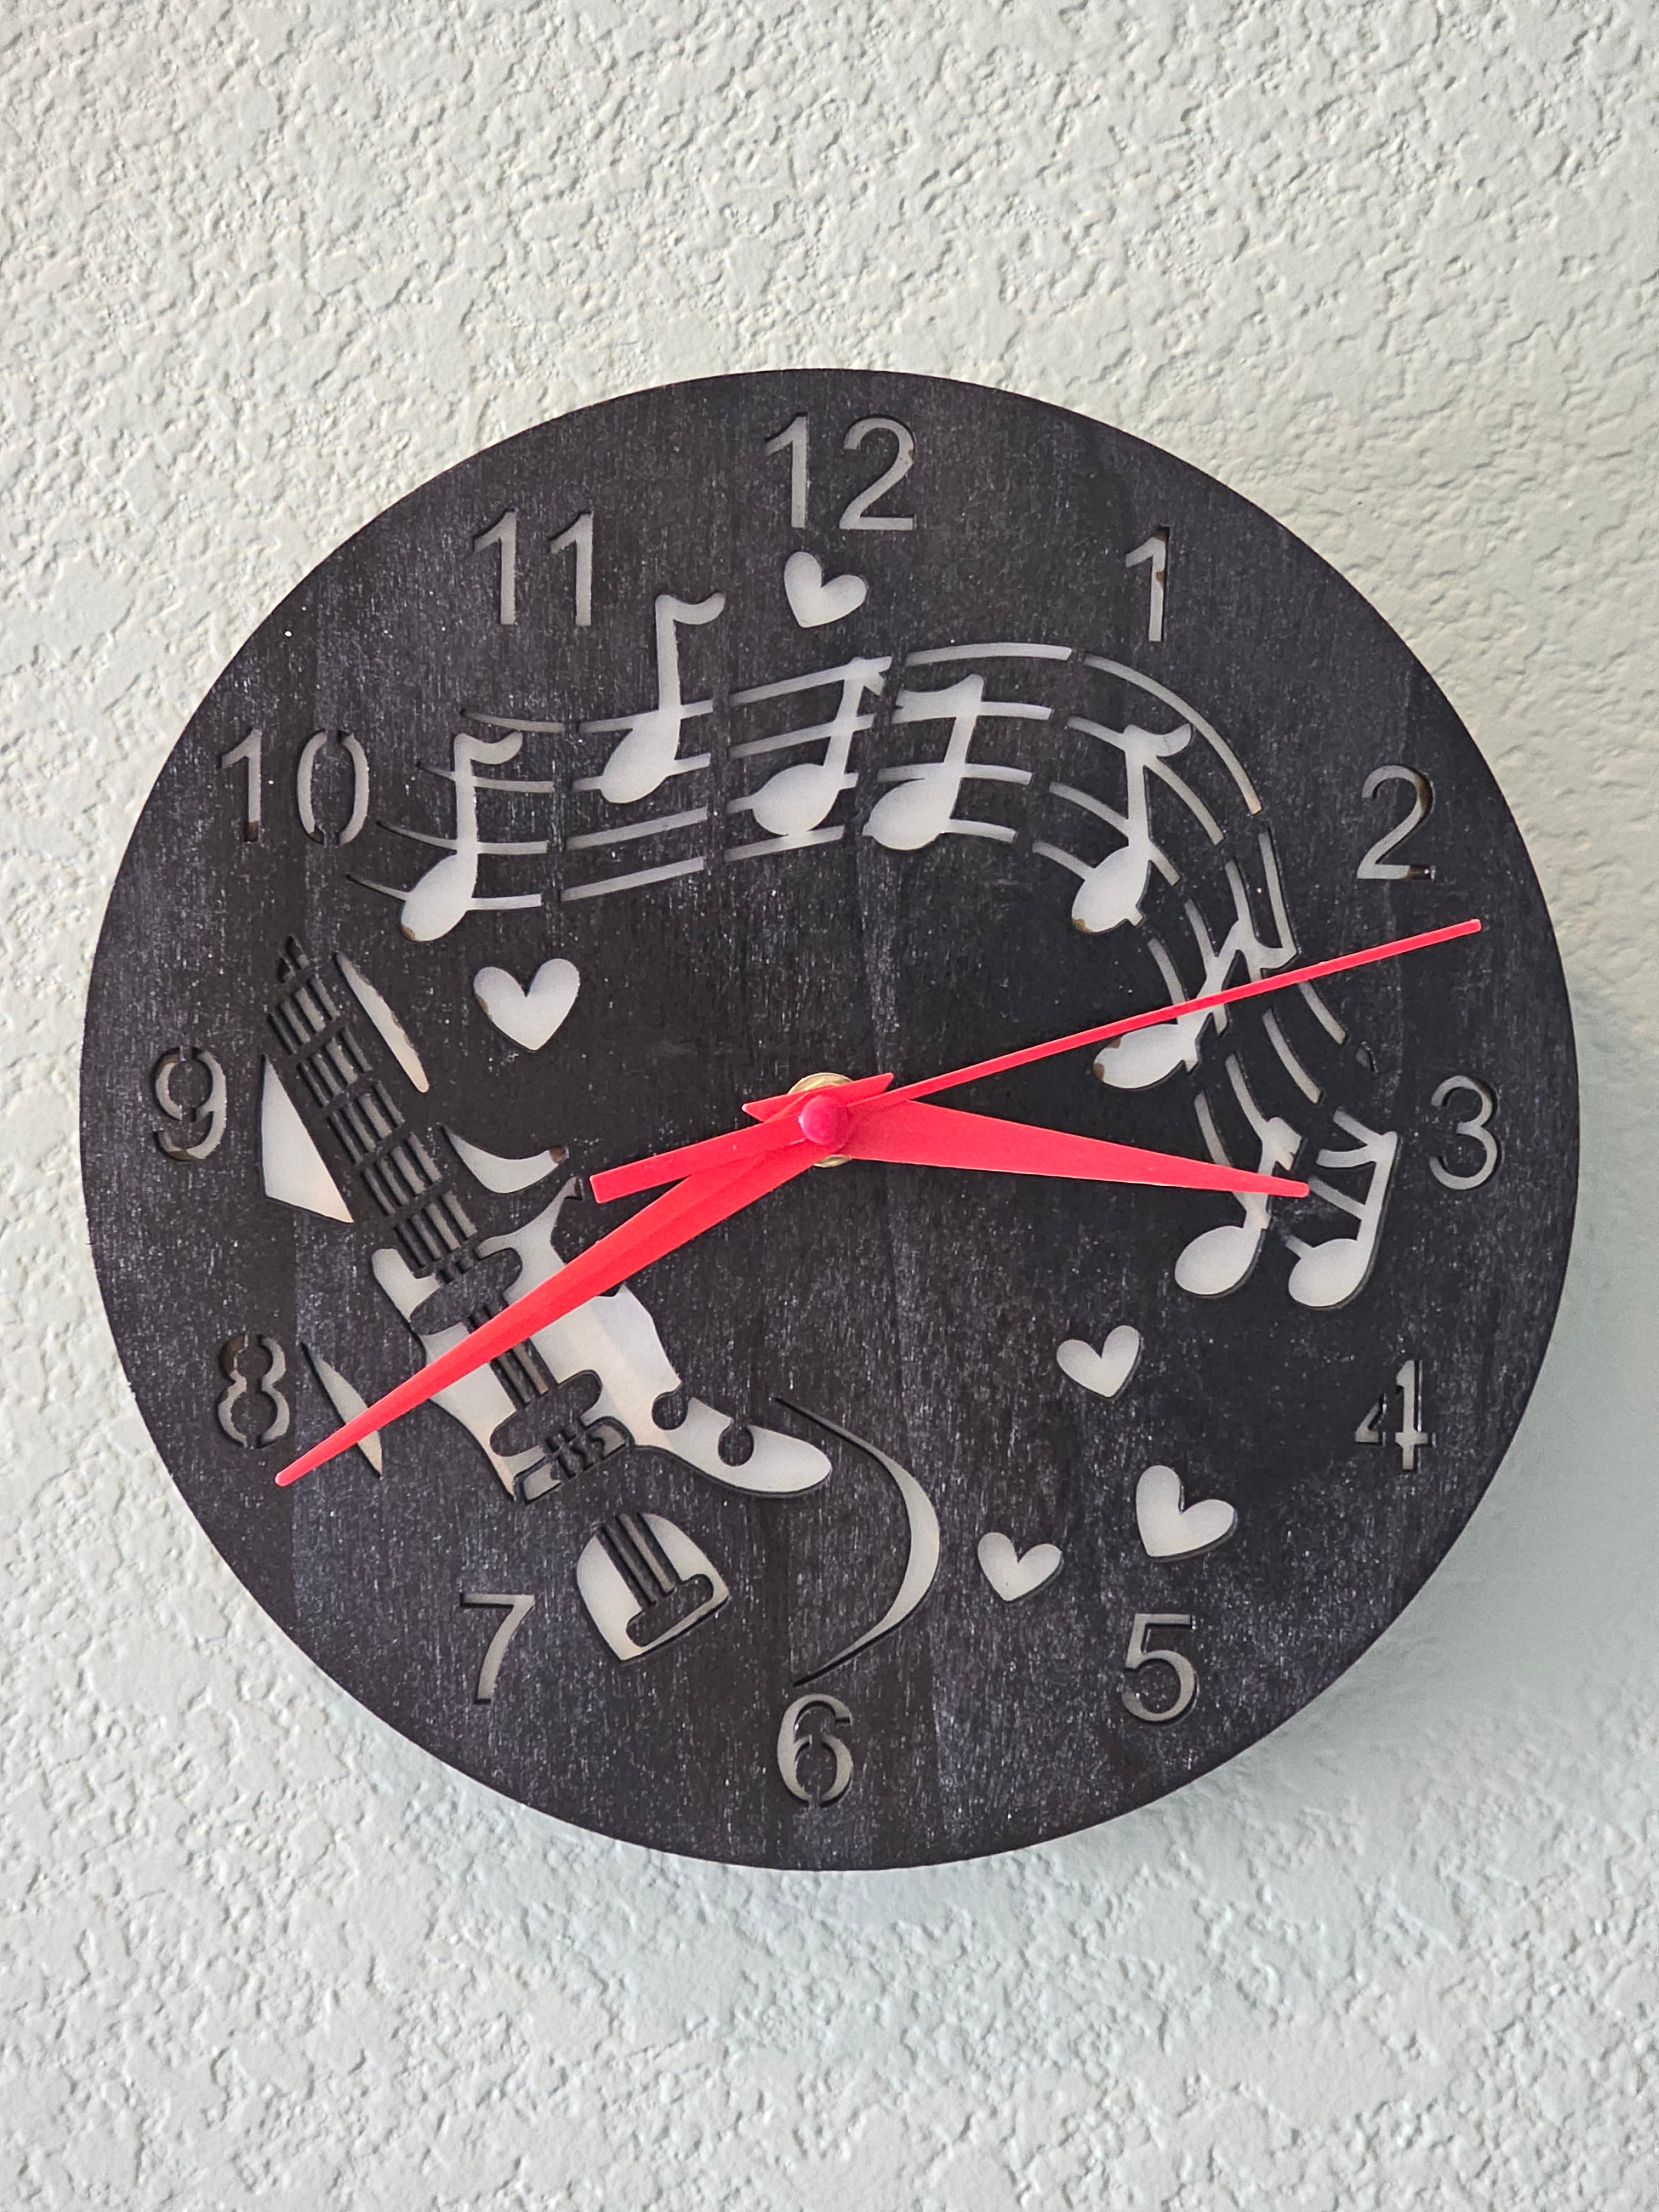 Music Clock